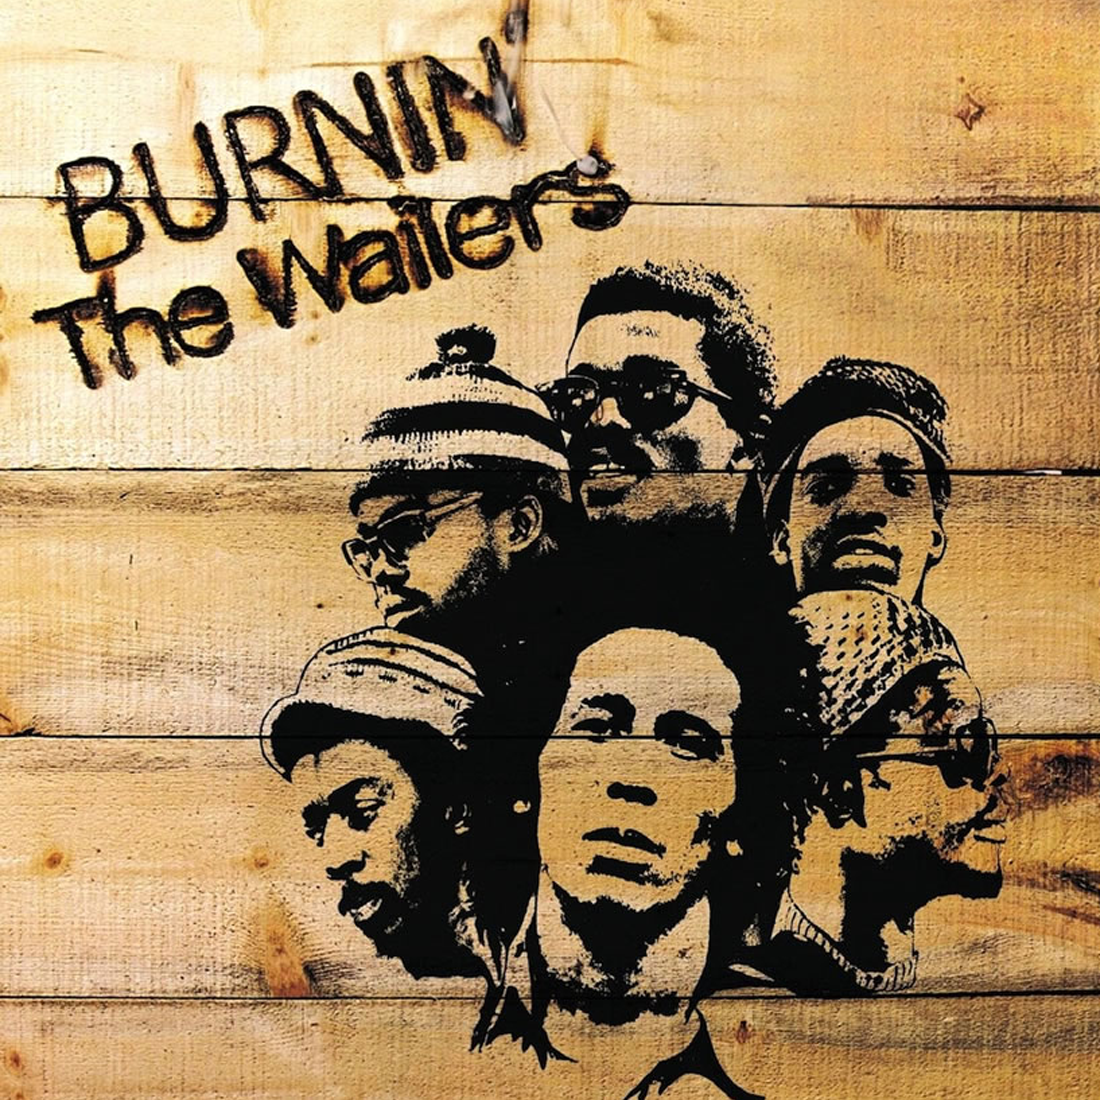 Bob Marley and The Wailers - Burnin' (Remastered)